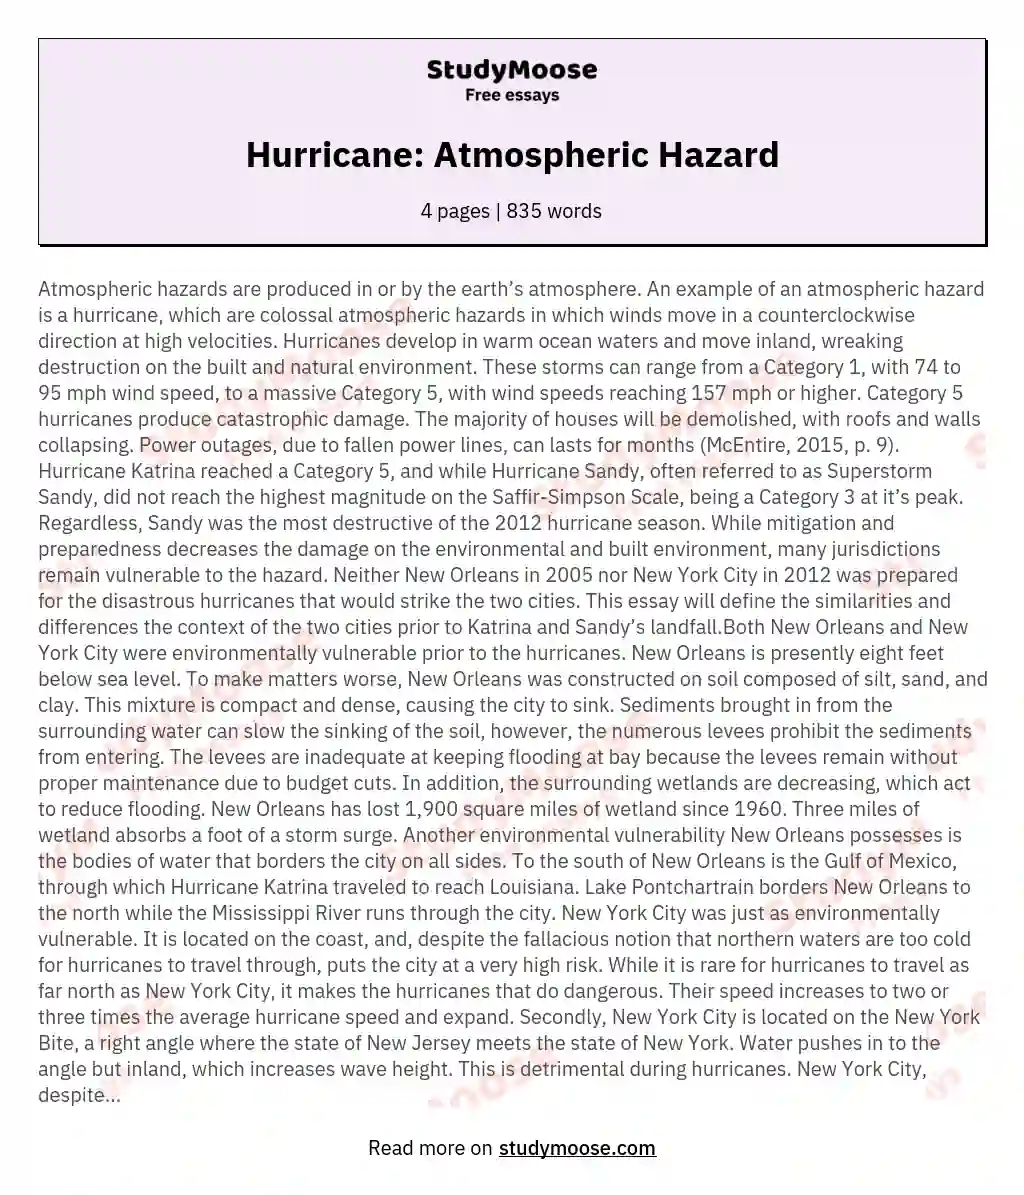 Hurricane: Atmospheric Hazard essay